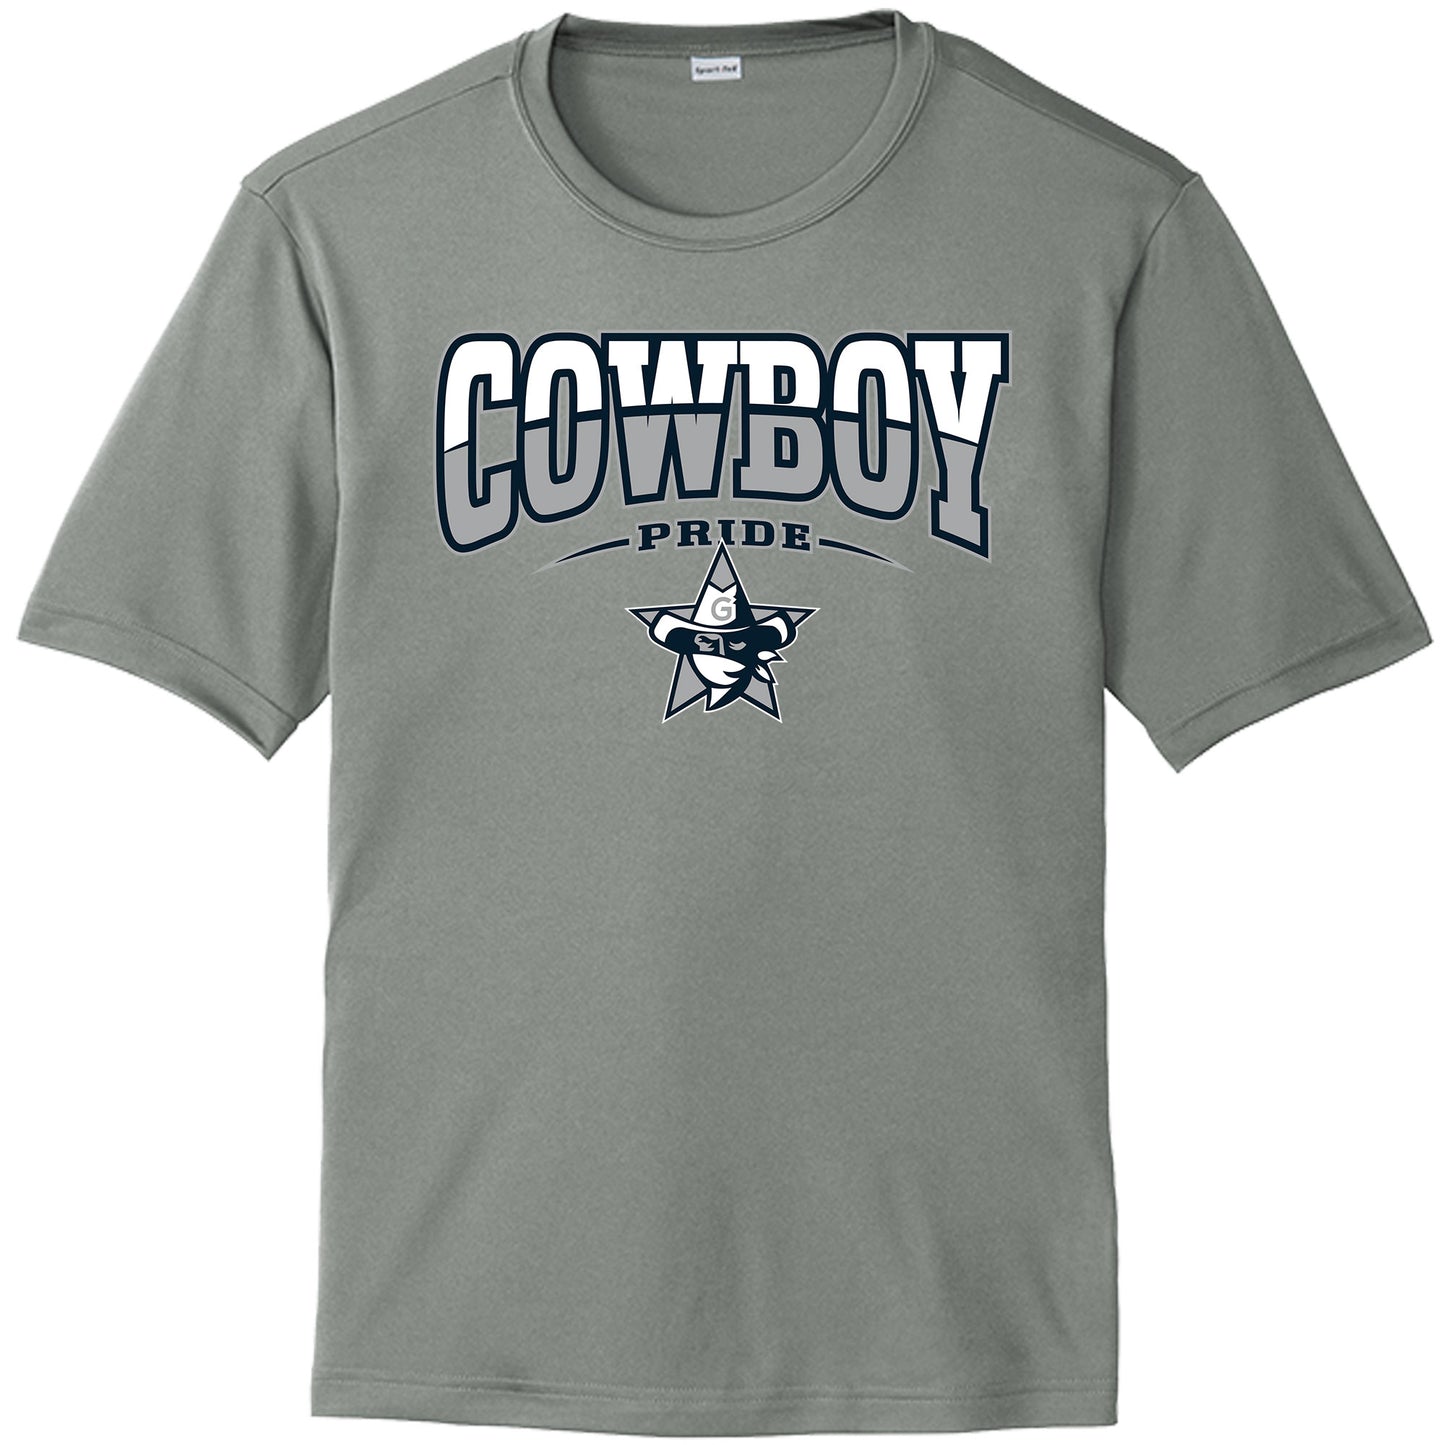 Gaither High School Drifit Shirt with Printed Cowboys Logo